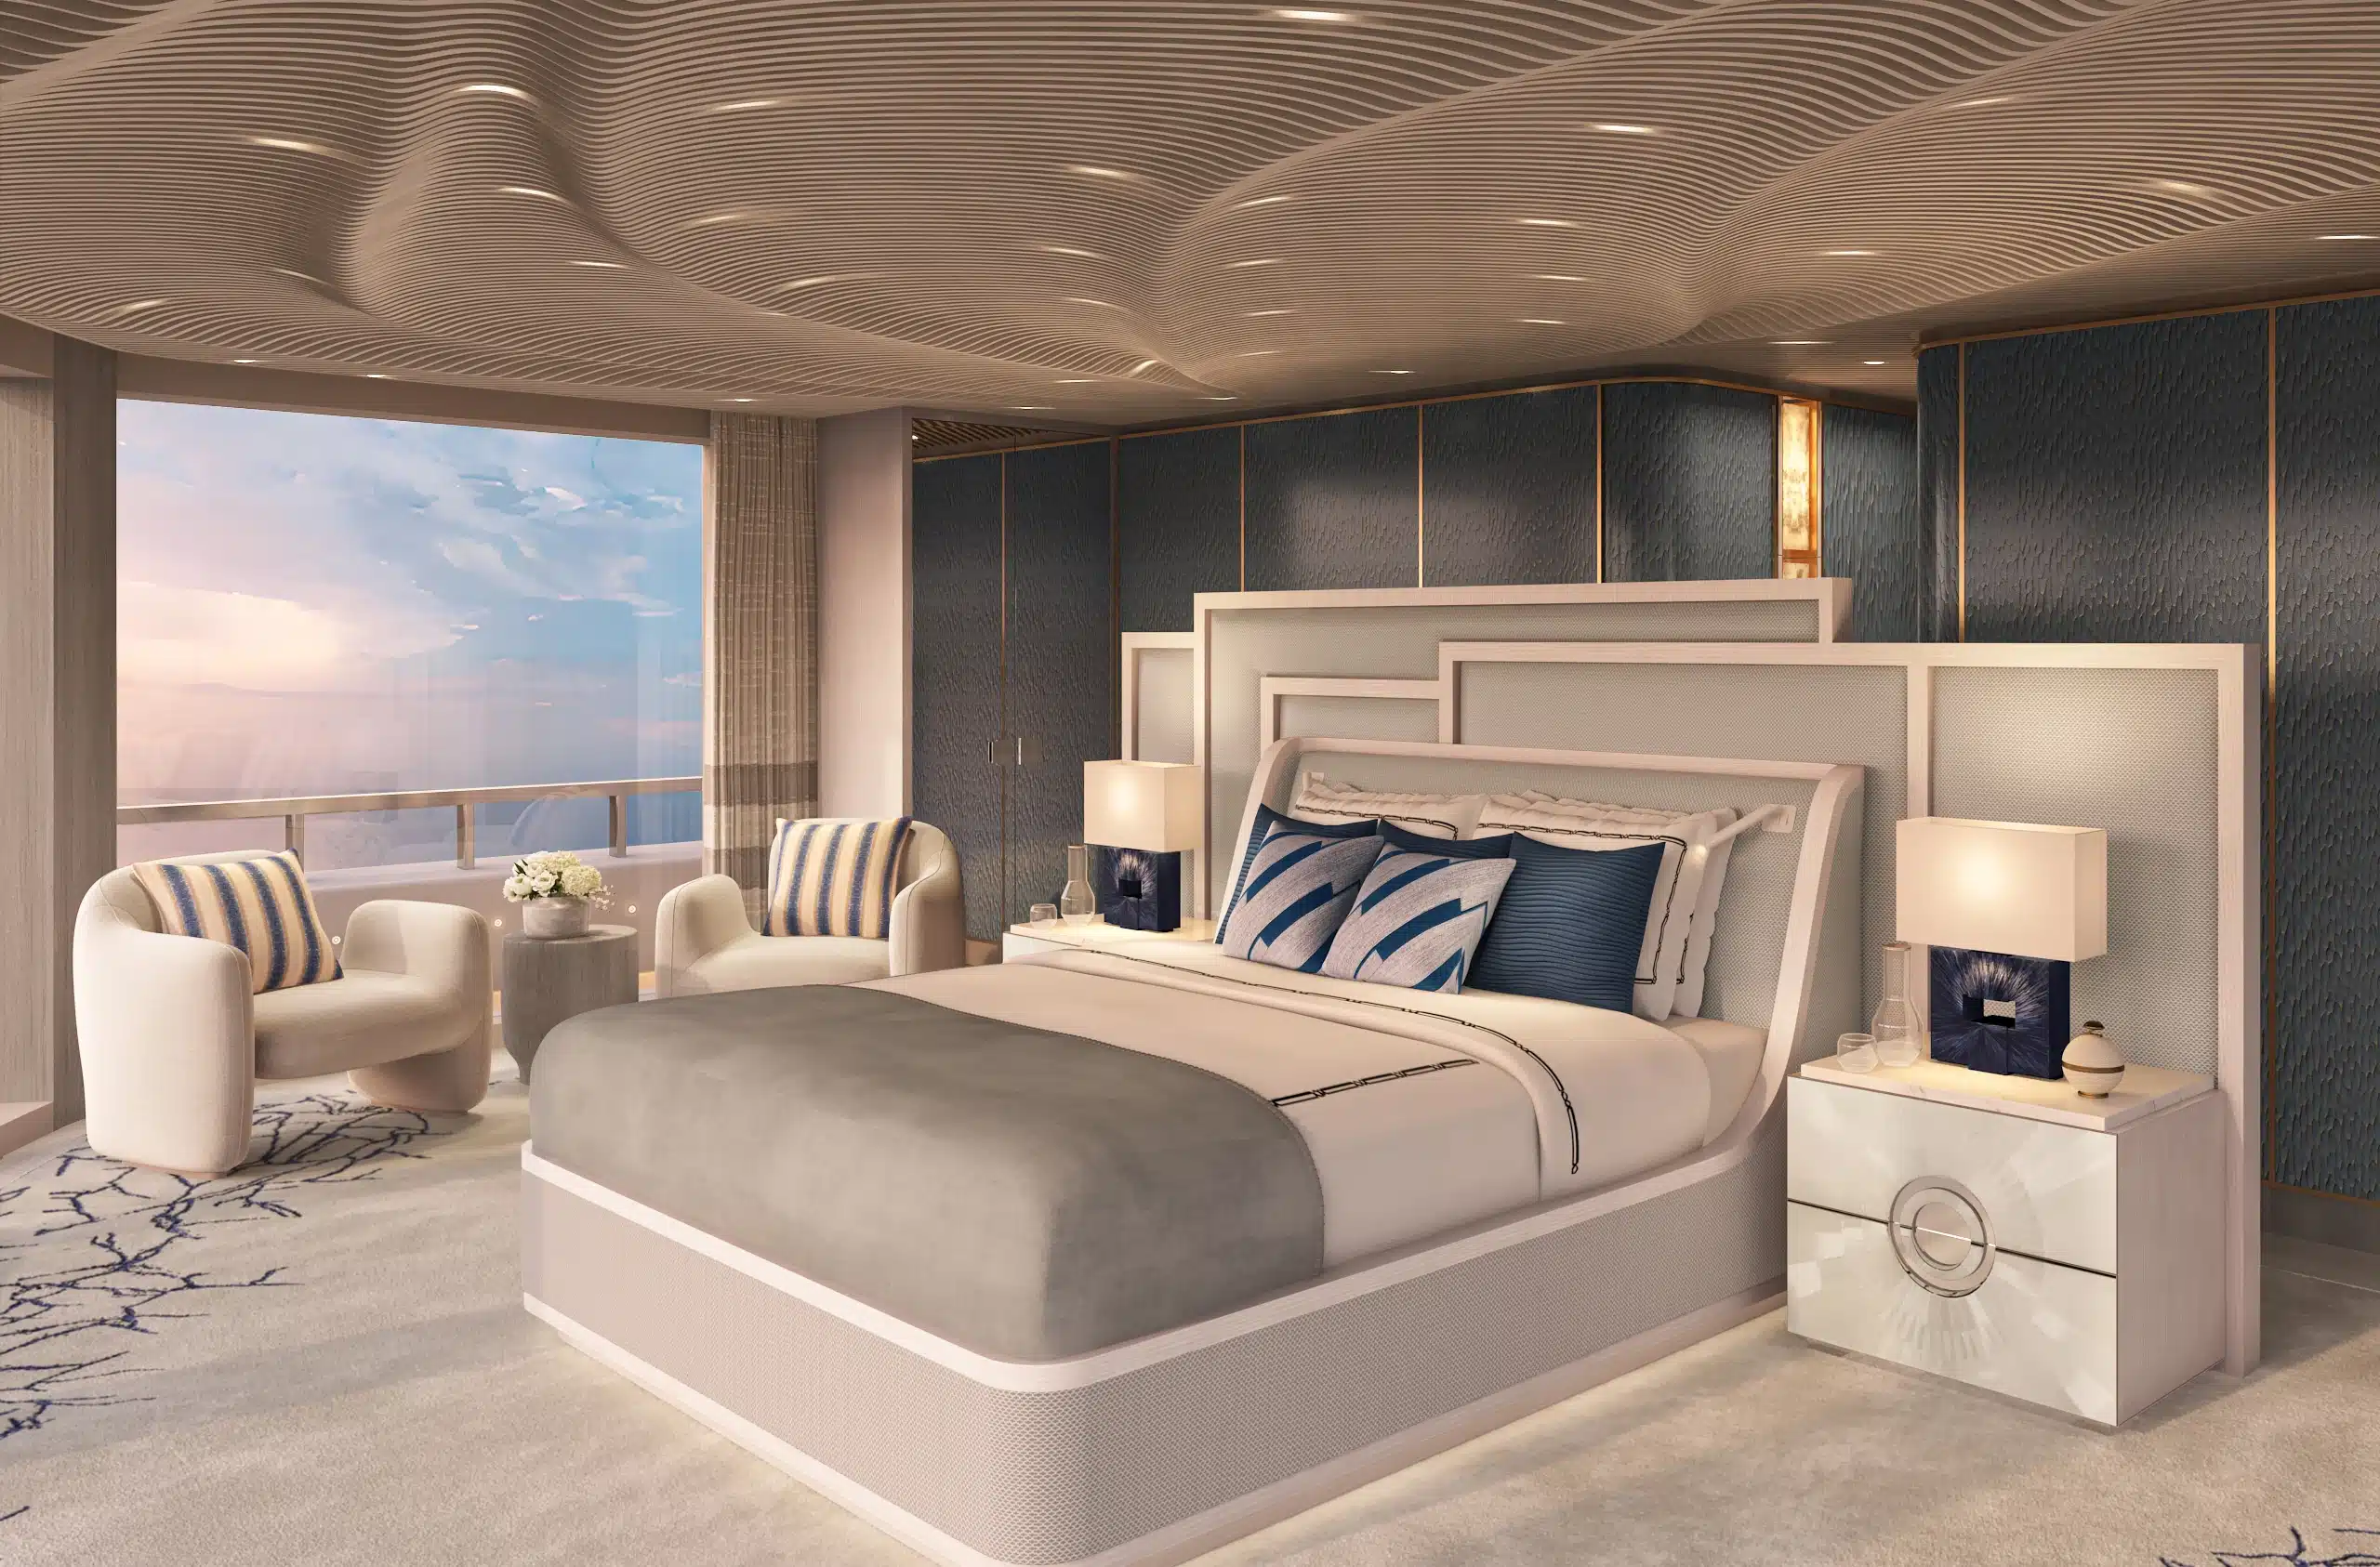 New names in superyacht design include katharine pooley, residential interior designer turned marine designer